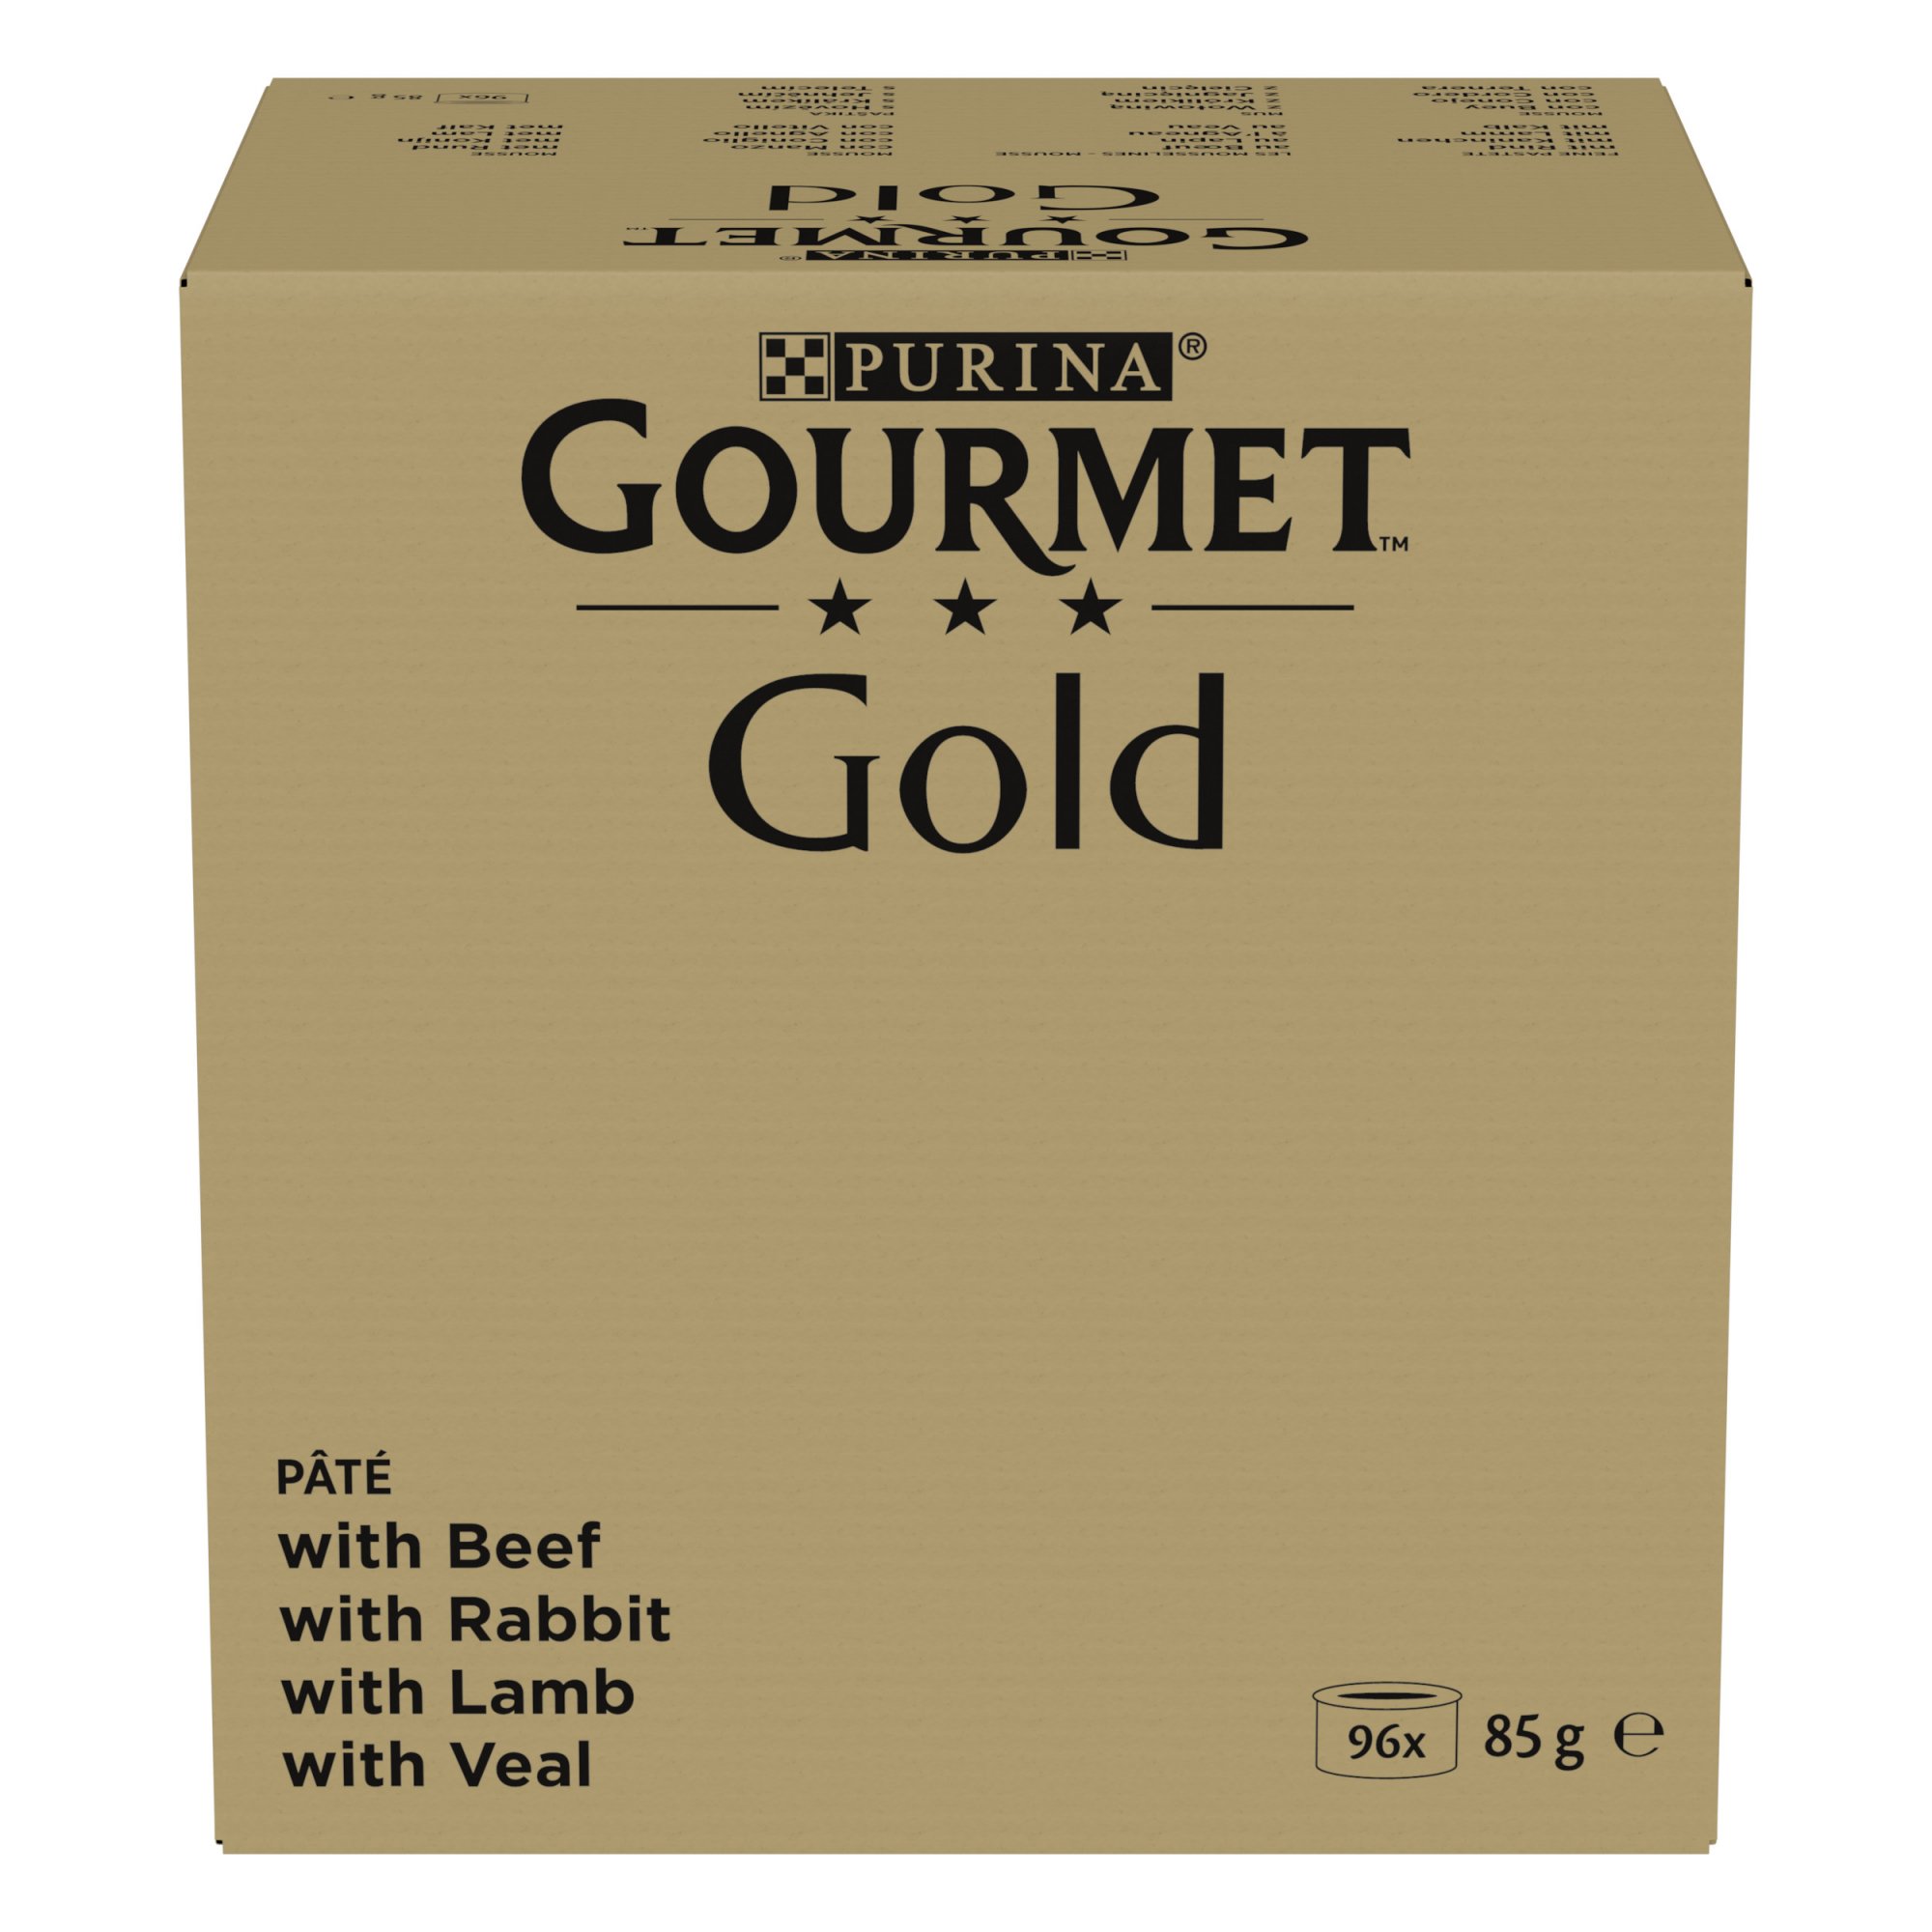 Gourmet Gold Mousselines per gatti - Pack 96x85g